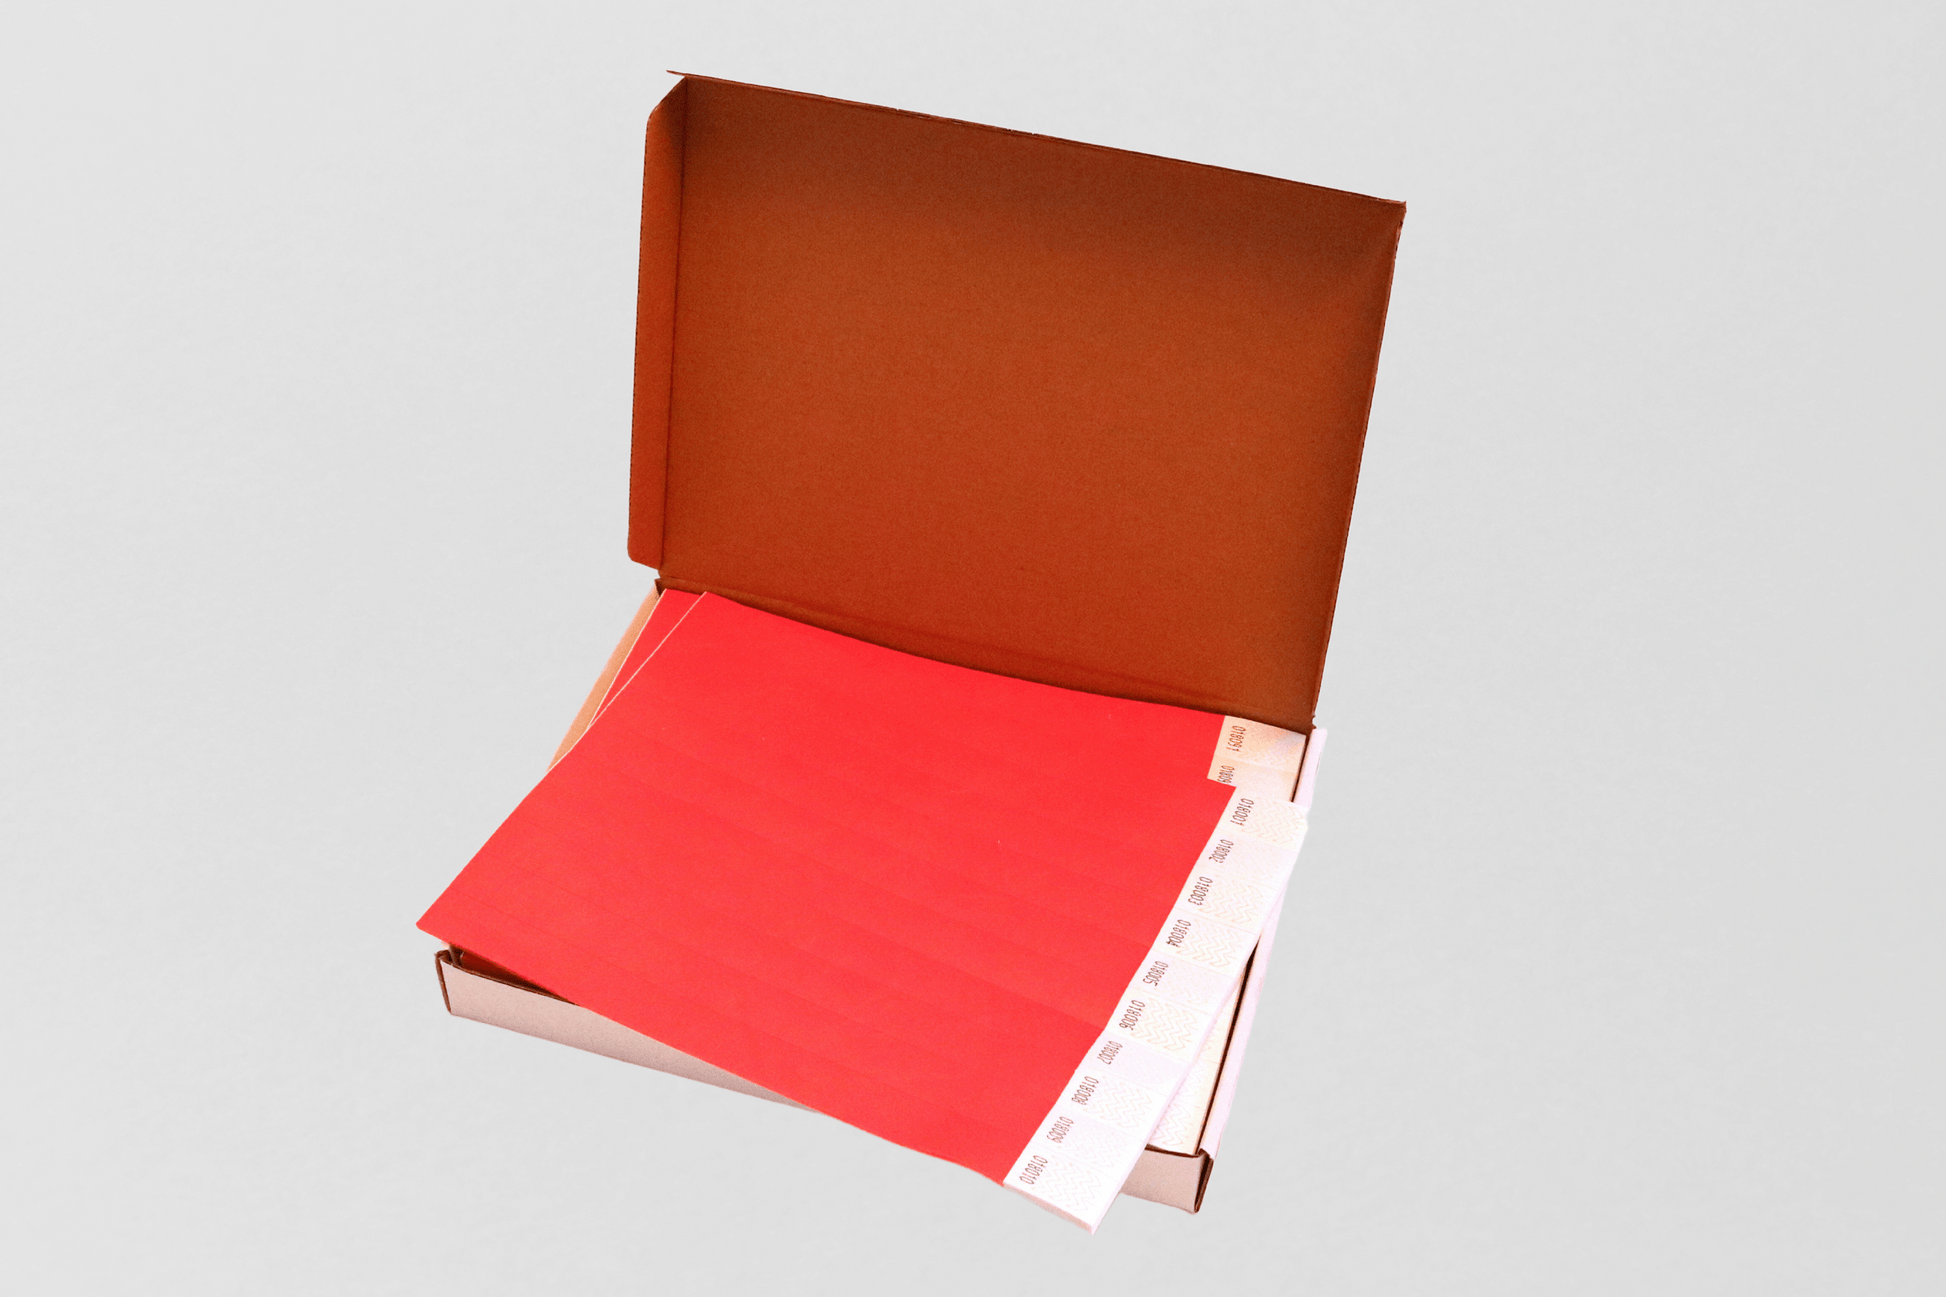 Et rødt Kasse med 1000 papirarmbånd fra JM Band NO i boks på hvit bakgrunn.